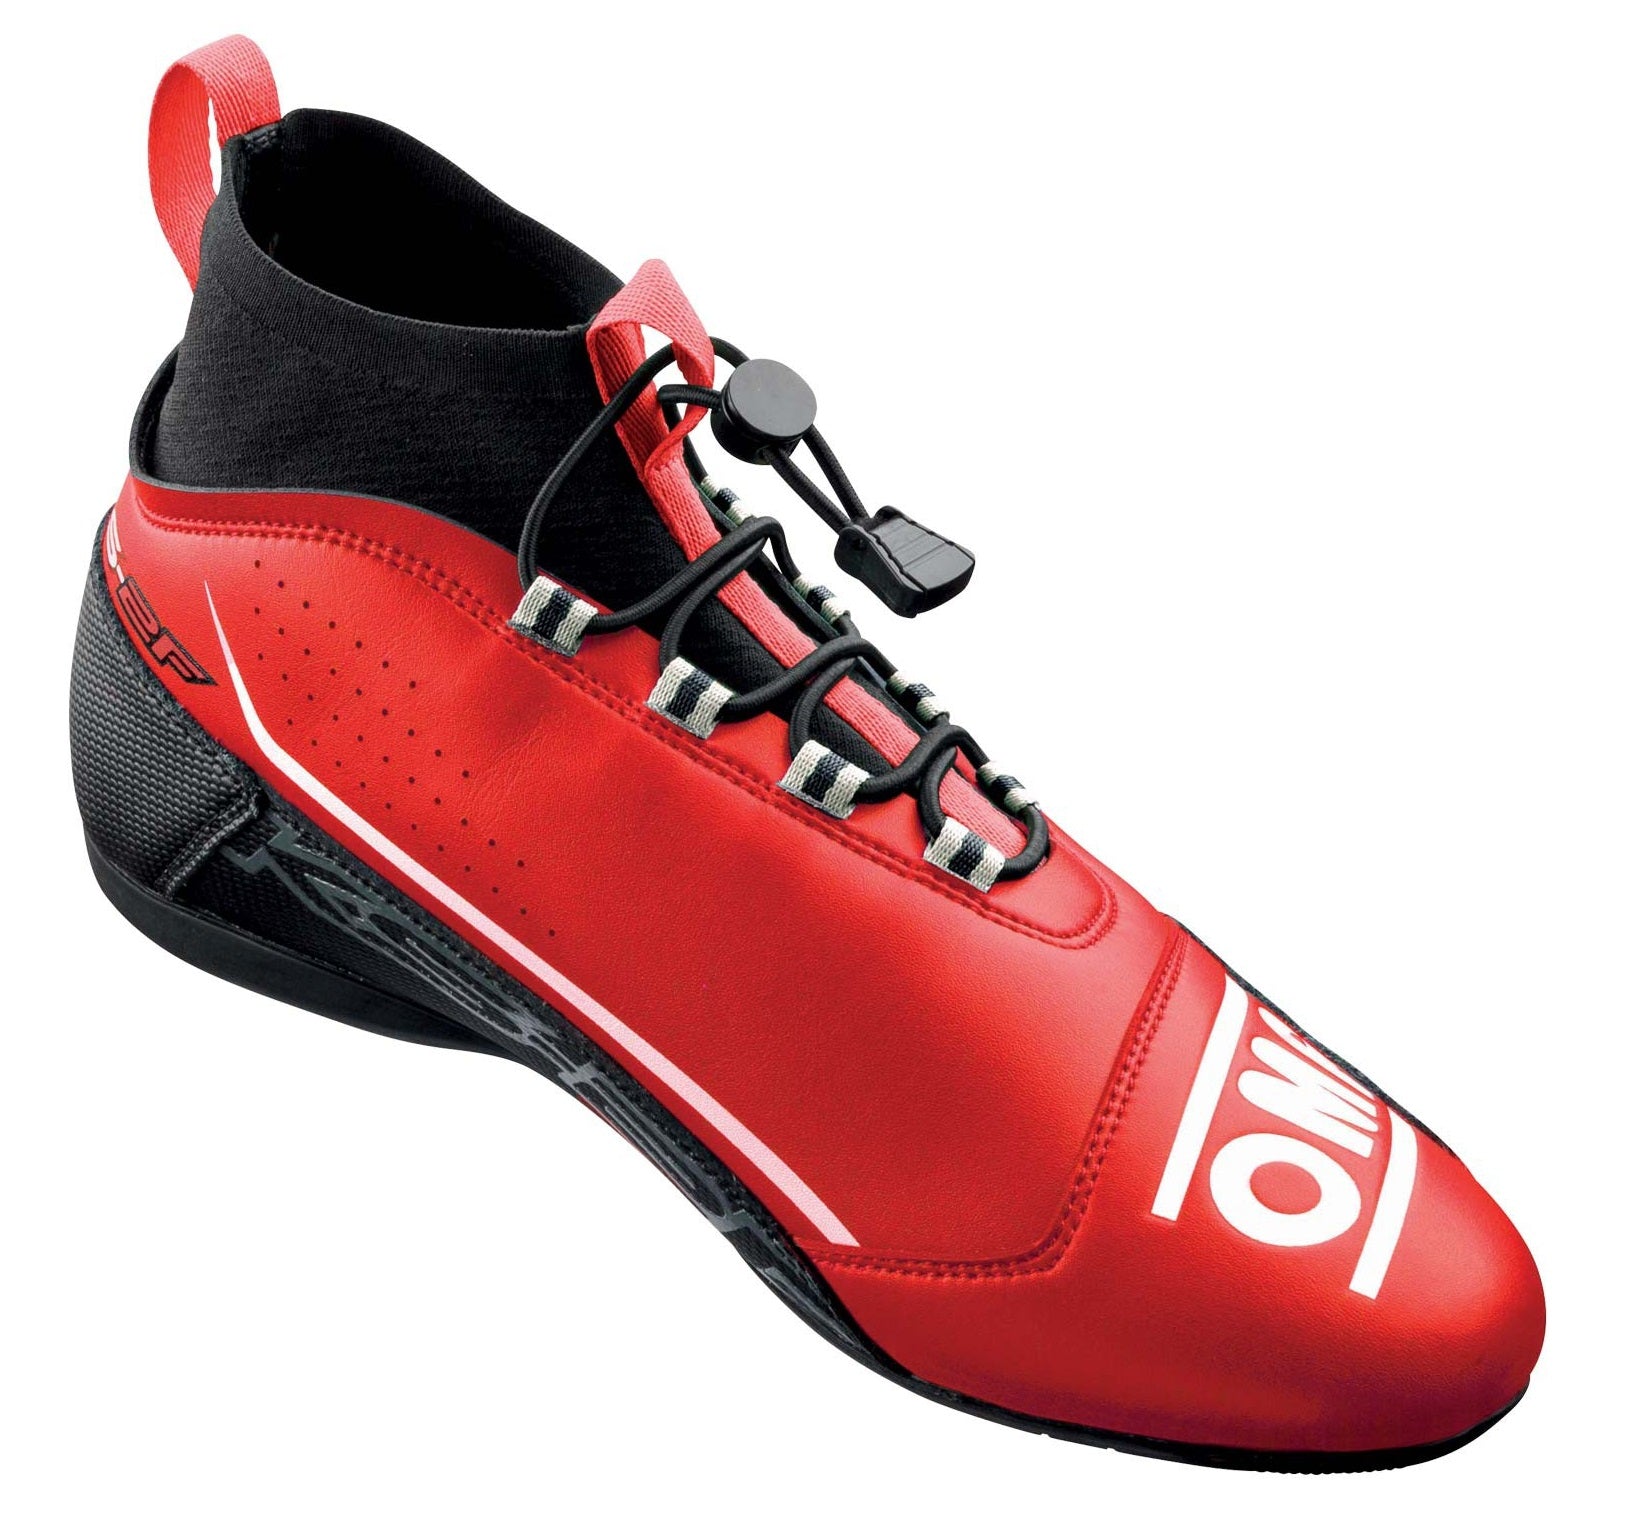 OMP KC0-0830-A01-060-38 KS-2F Karting shoes, red/black, size 38 Photo-1 